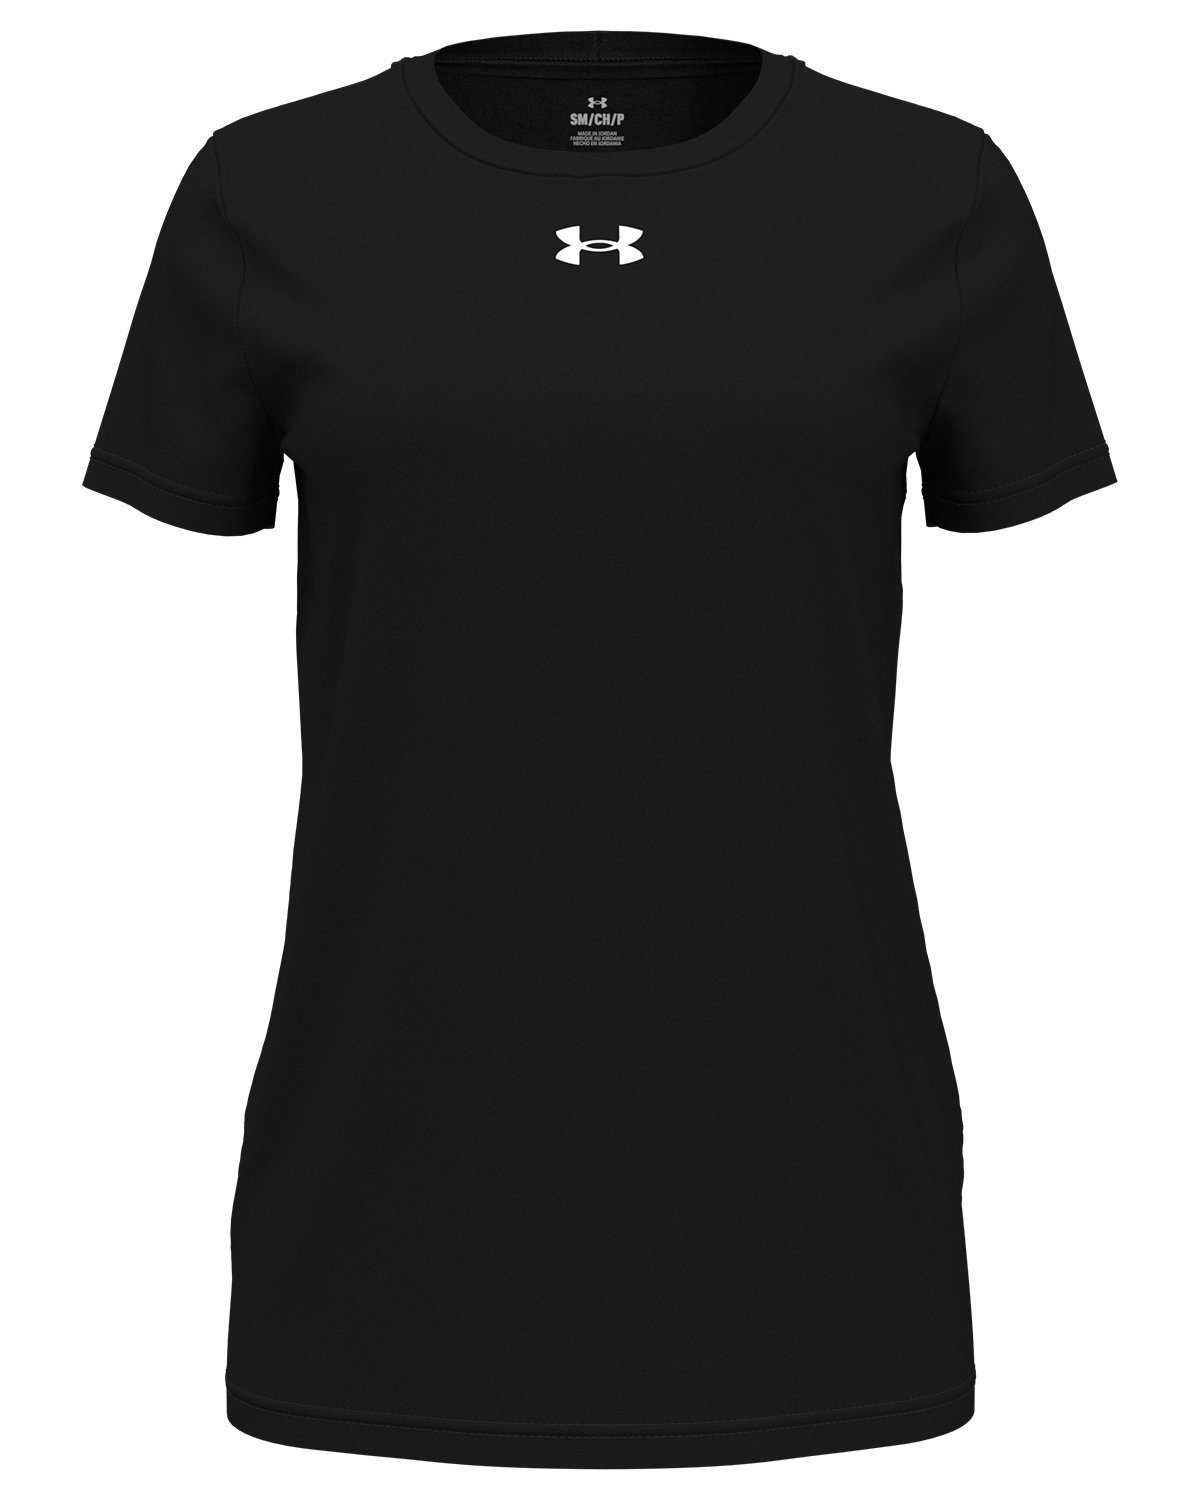 Picture of Under Armour Women's Team Tech T-Shirt